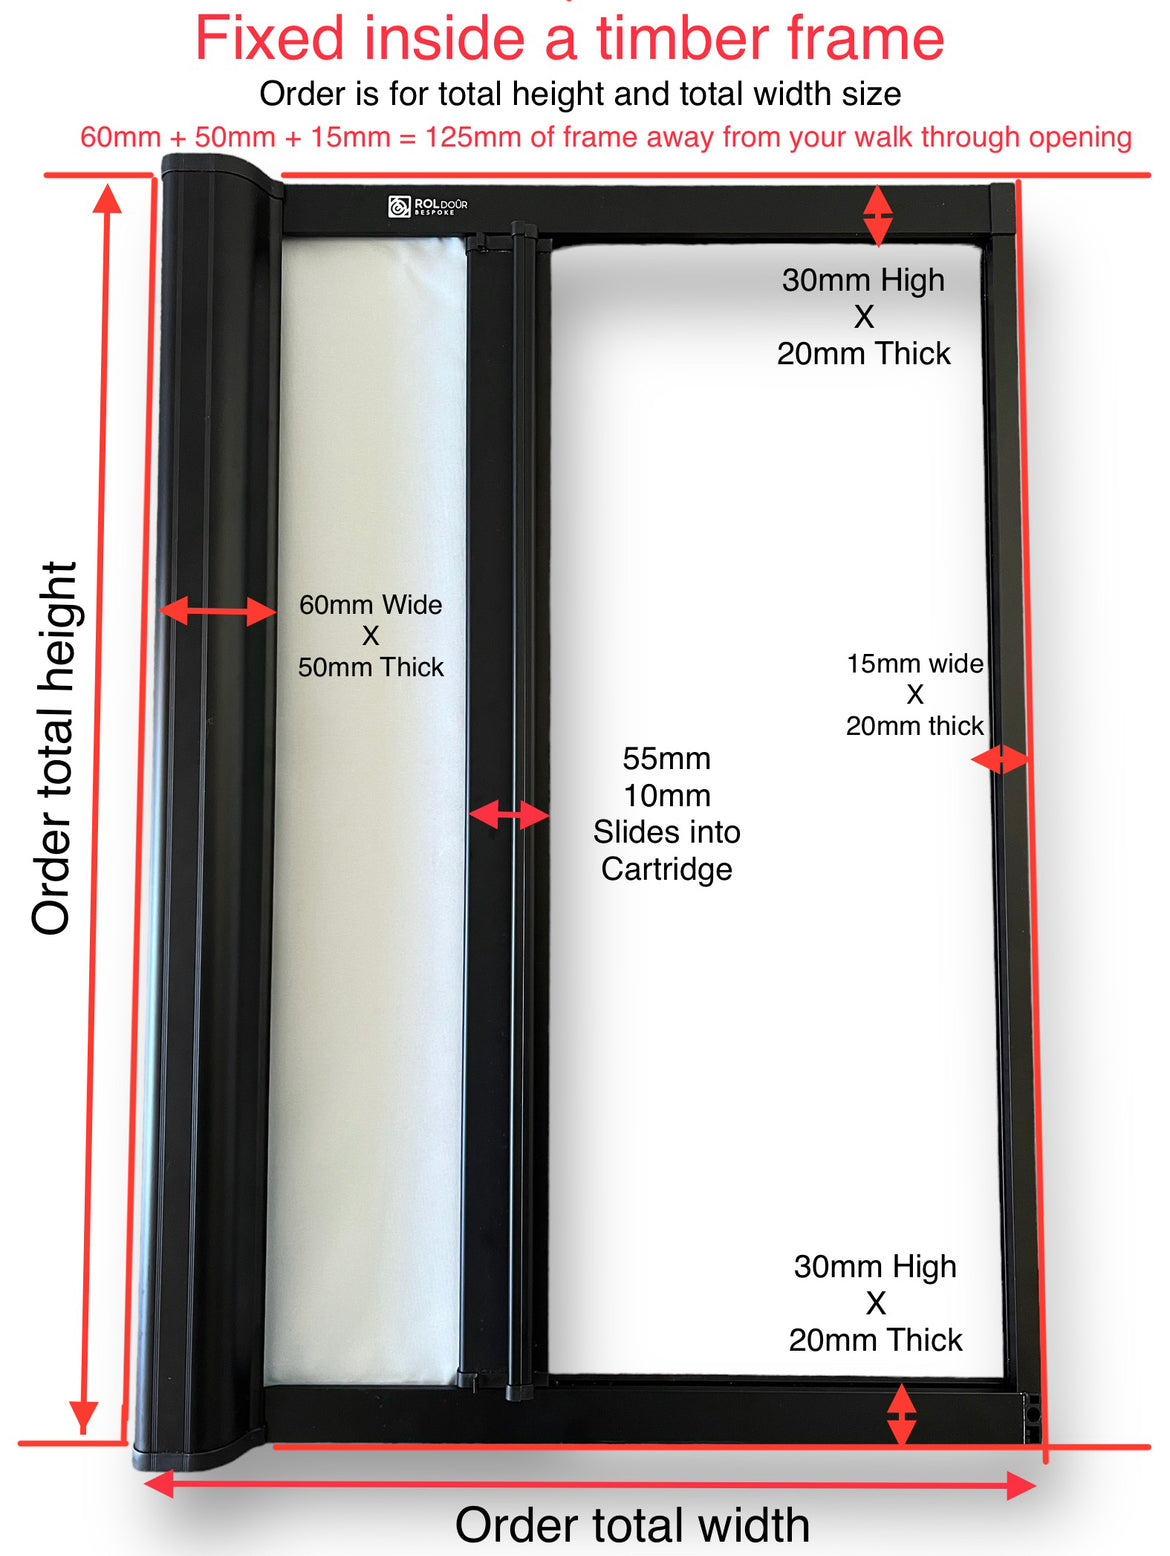 Corredera vertical ROLdour Kit de puerta retráctil gris oscuro Tambour Alternative